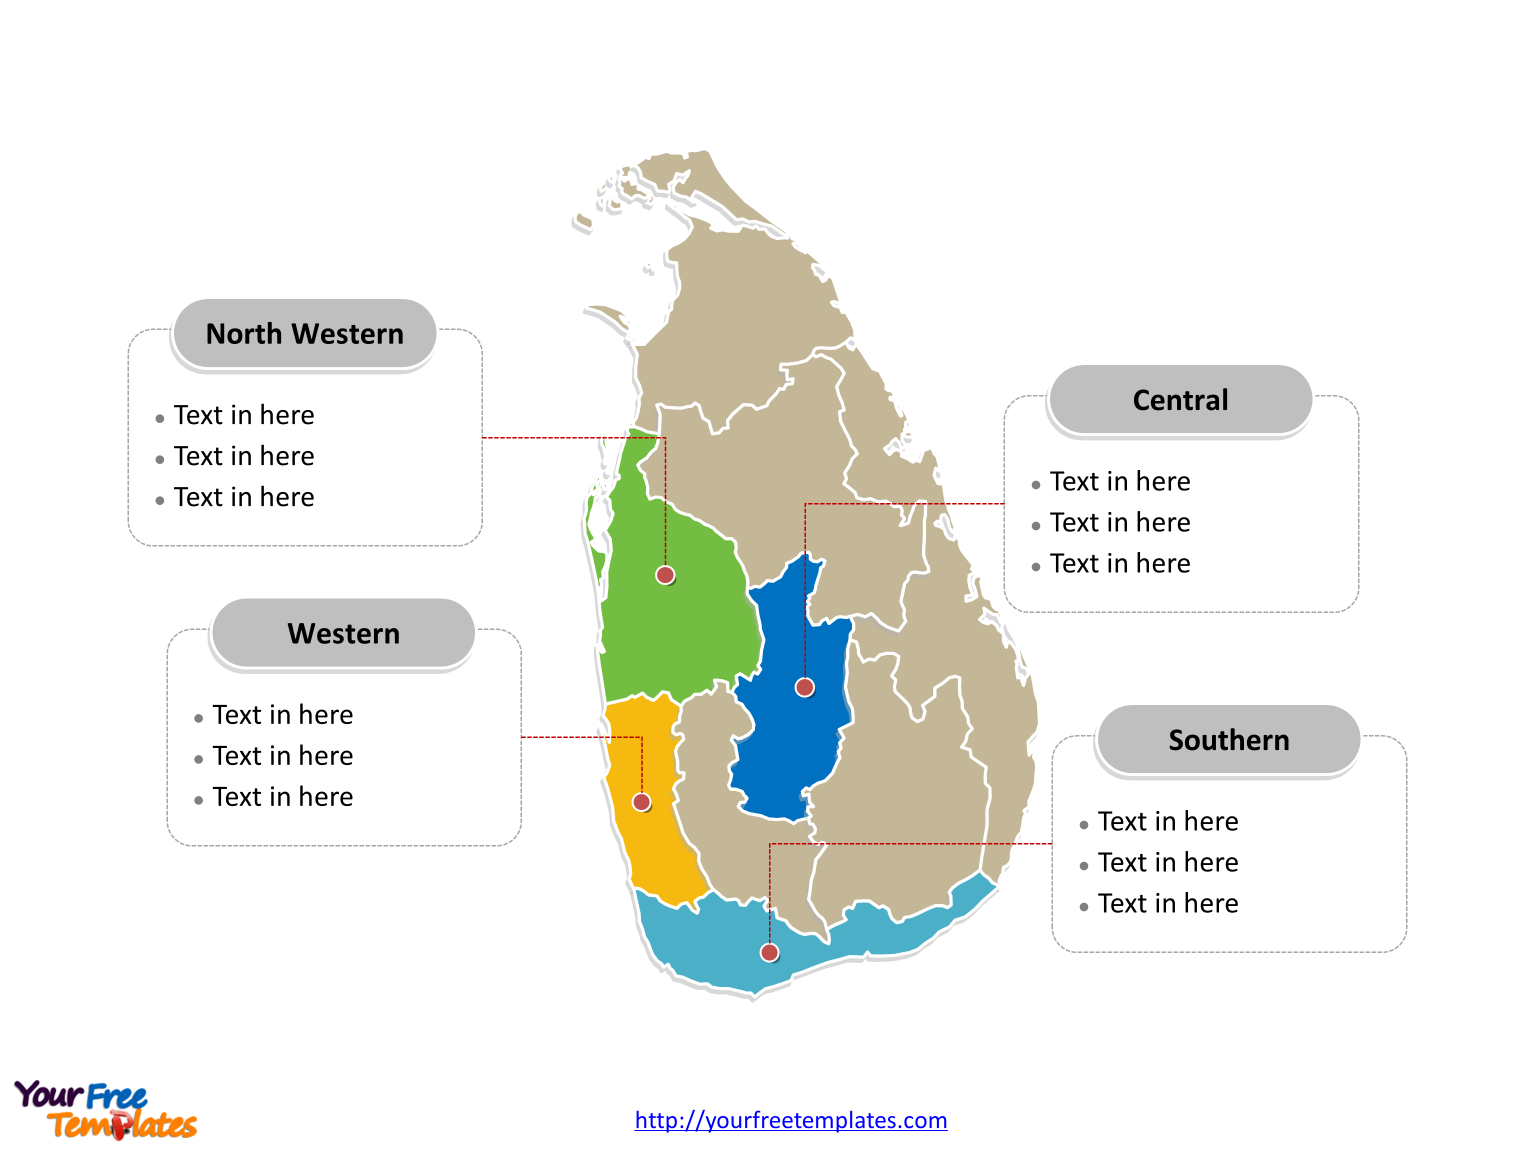 Sri Lanka Political map labeled with major provinces